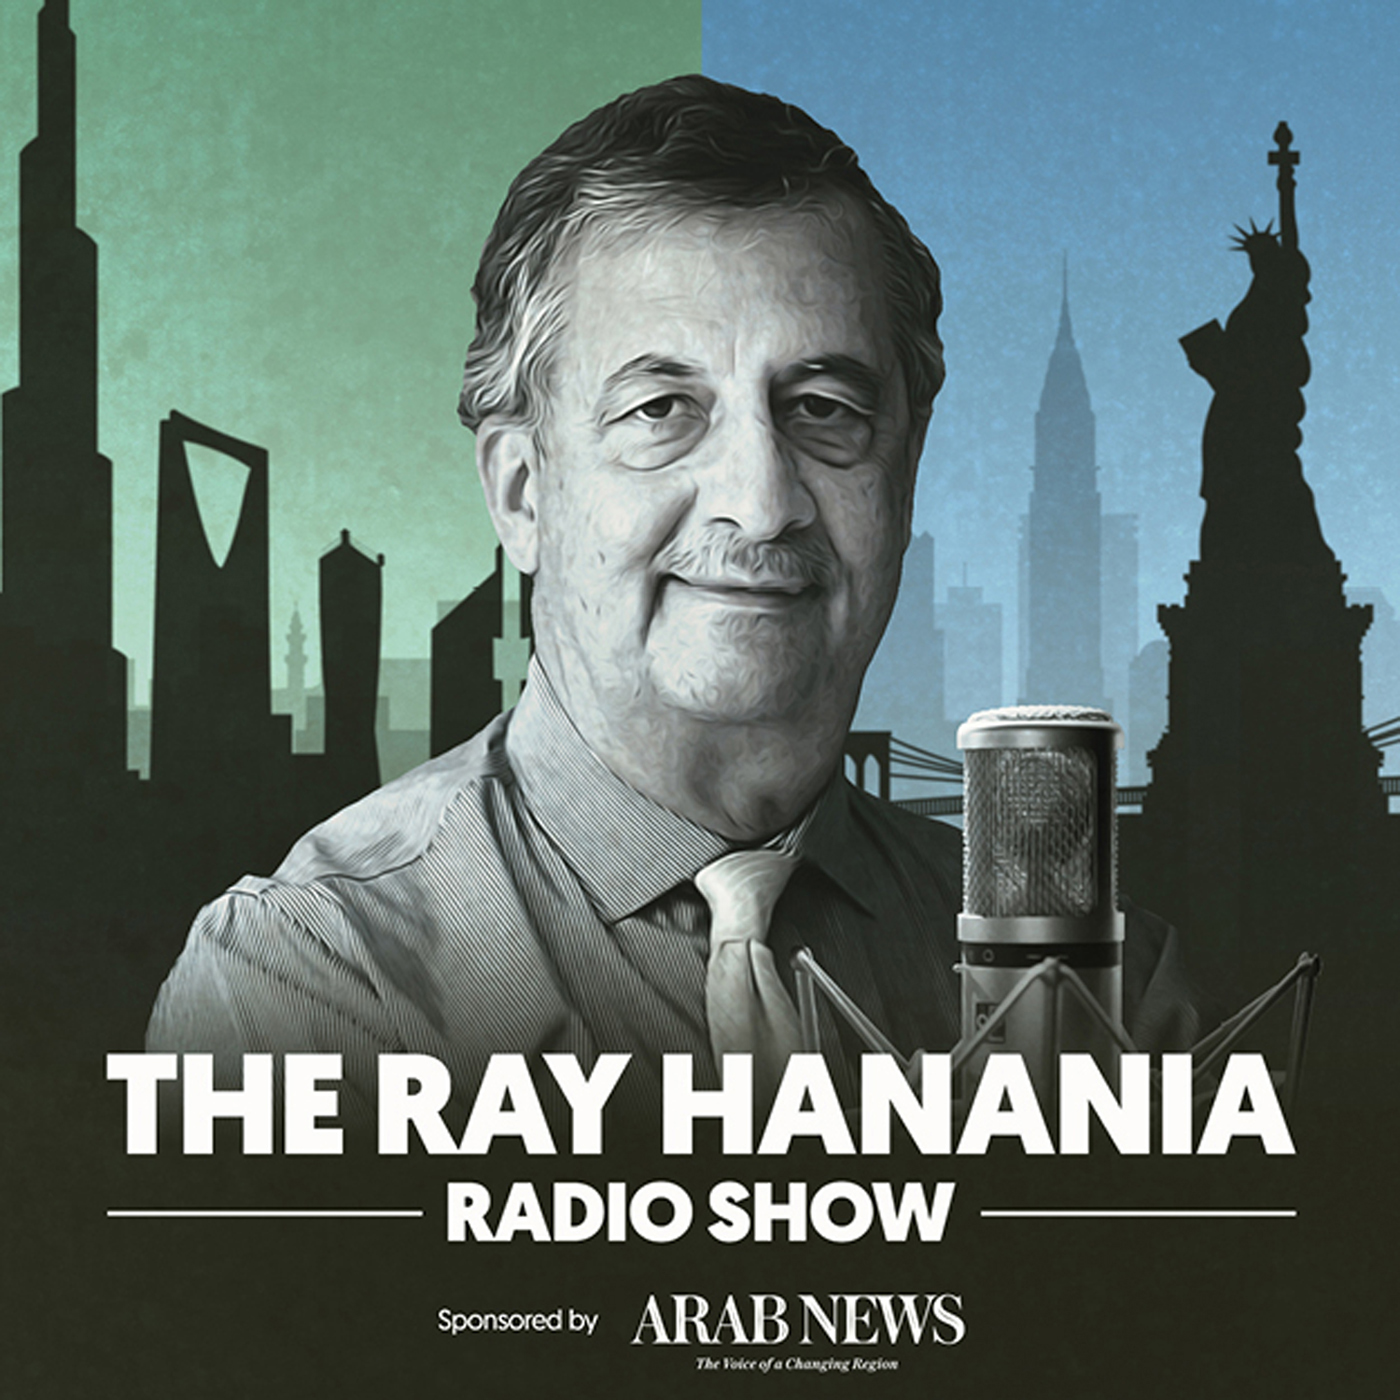 The Ray Hanania Radio Show-Arab News